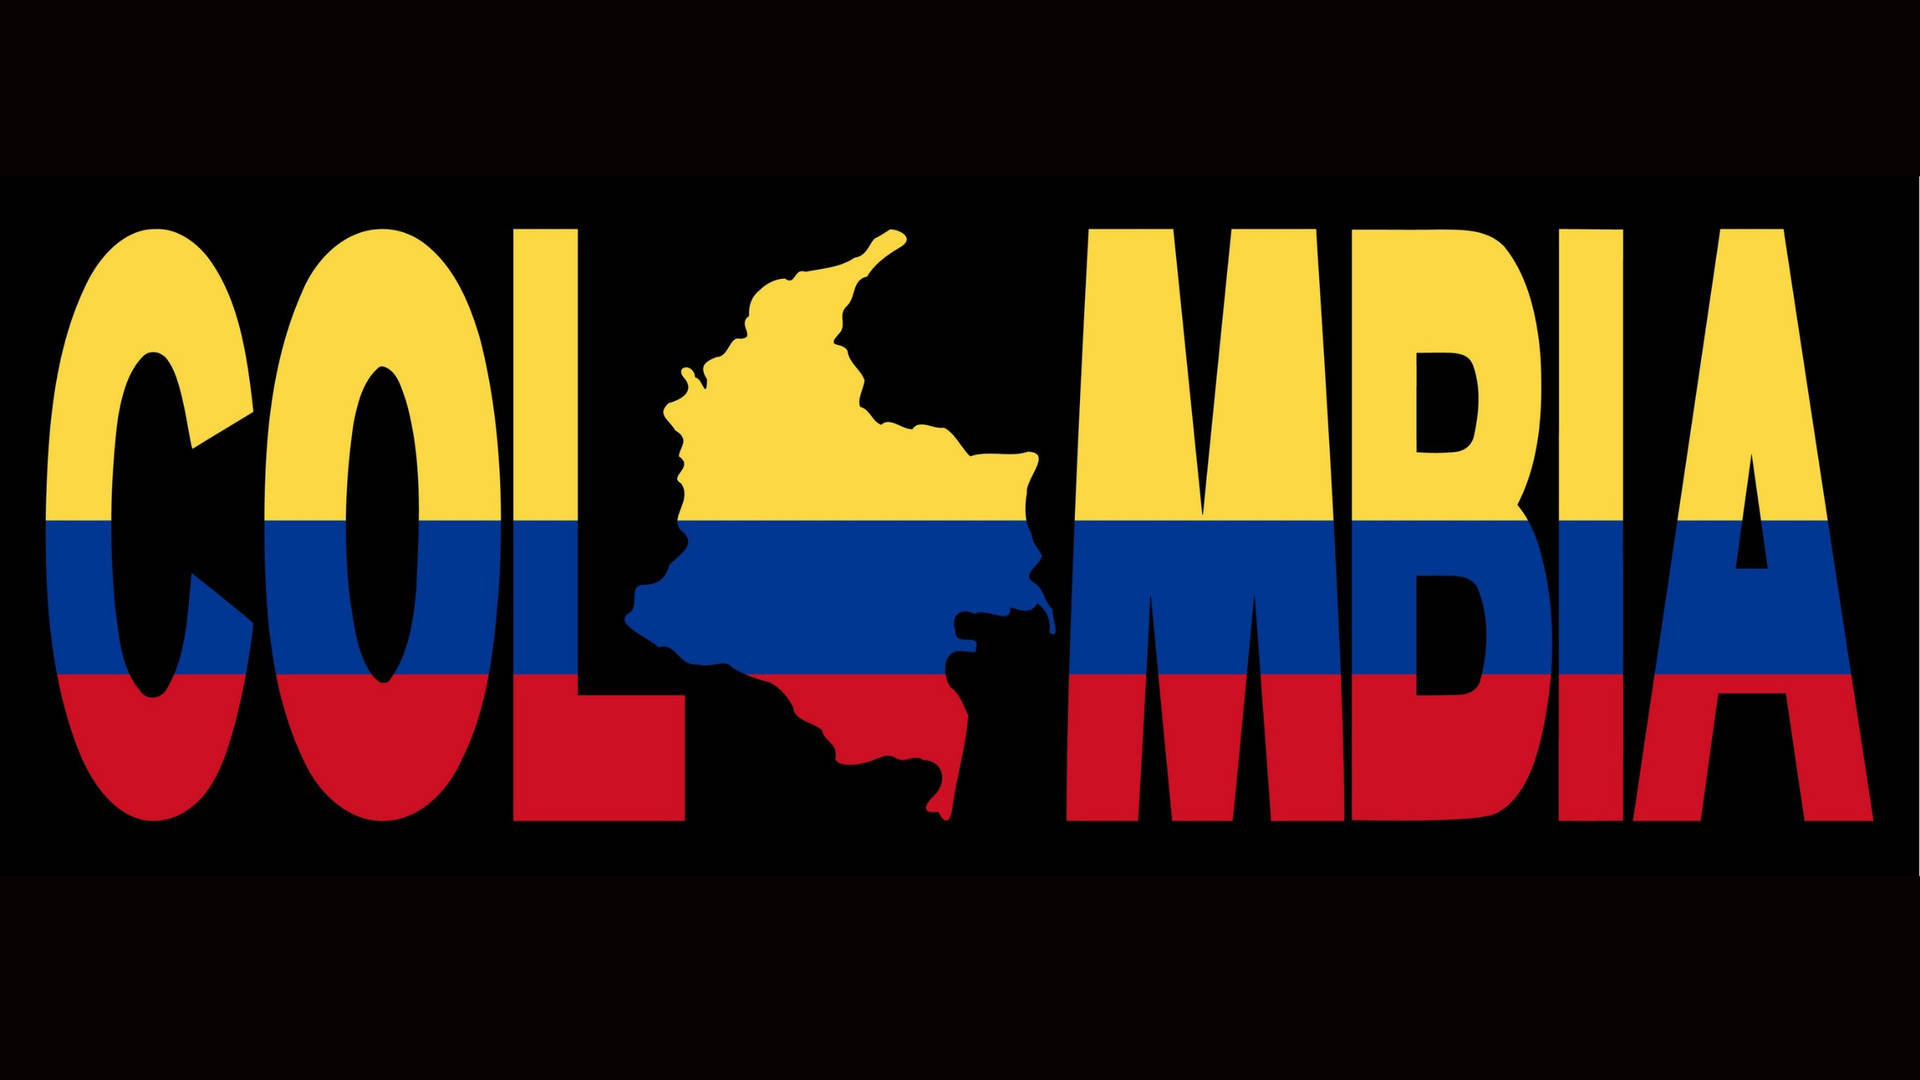 Flaggeund Karte Kolumbiens Wallpaper